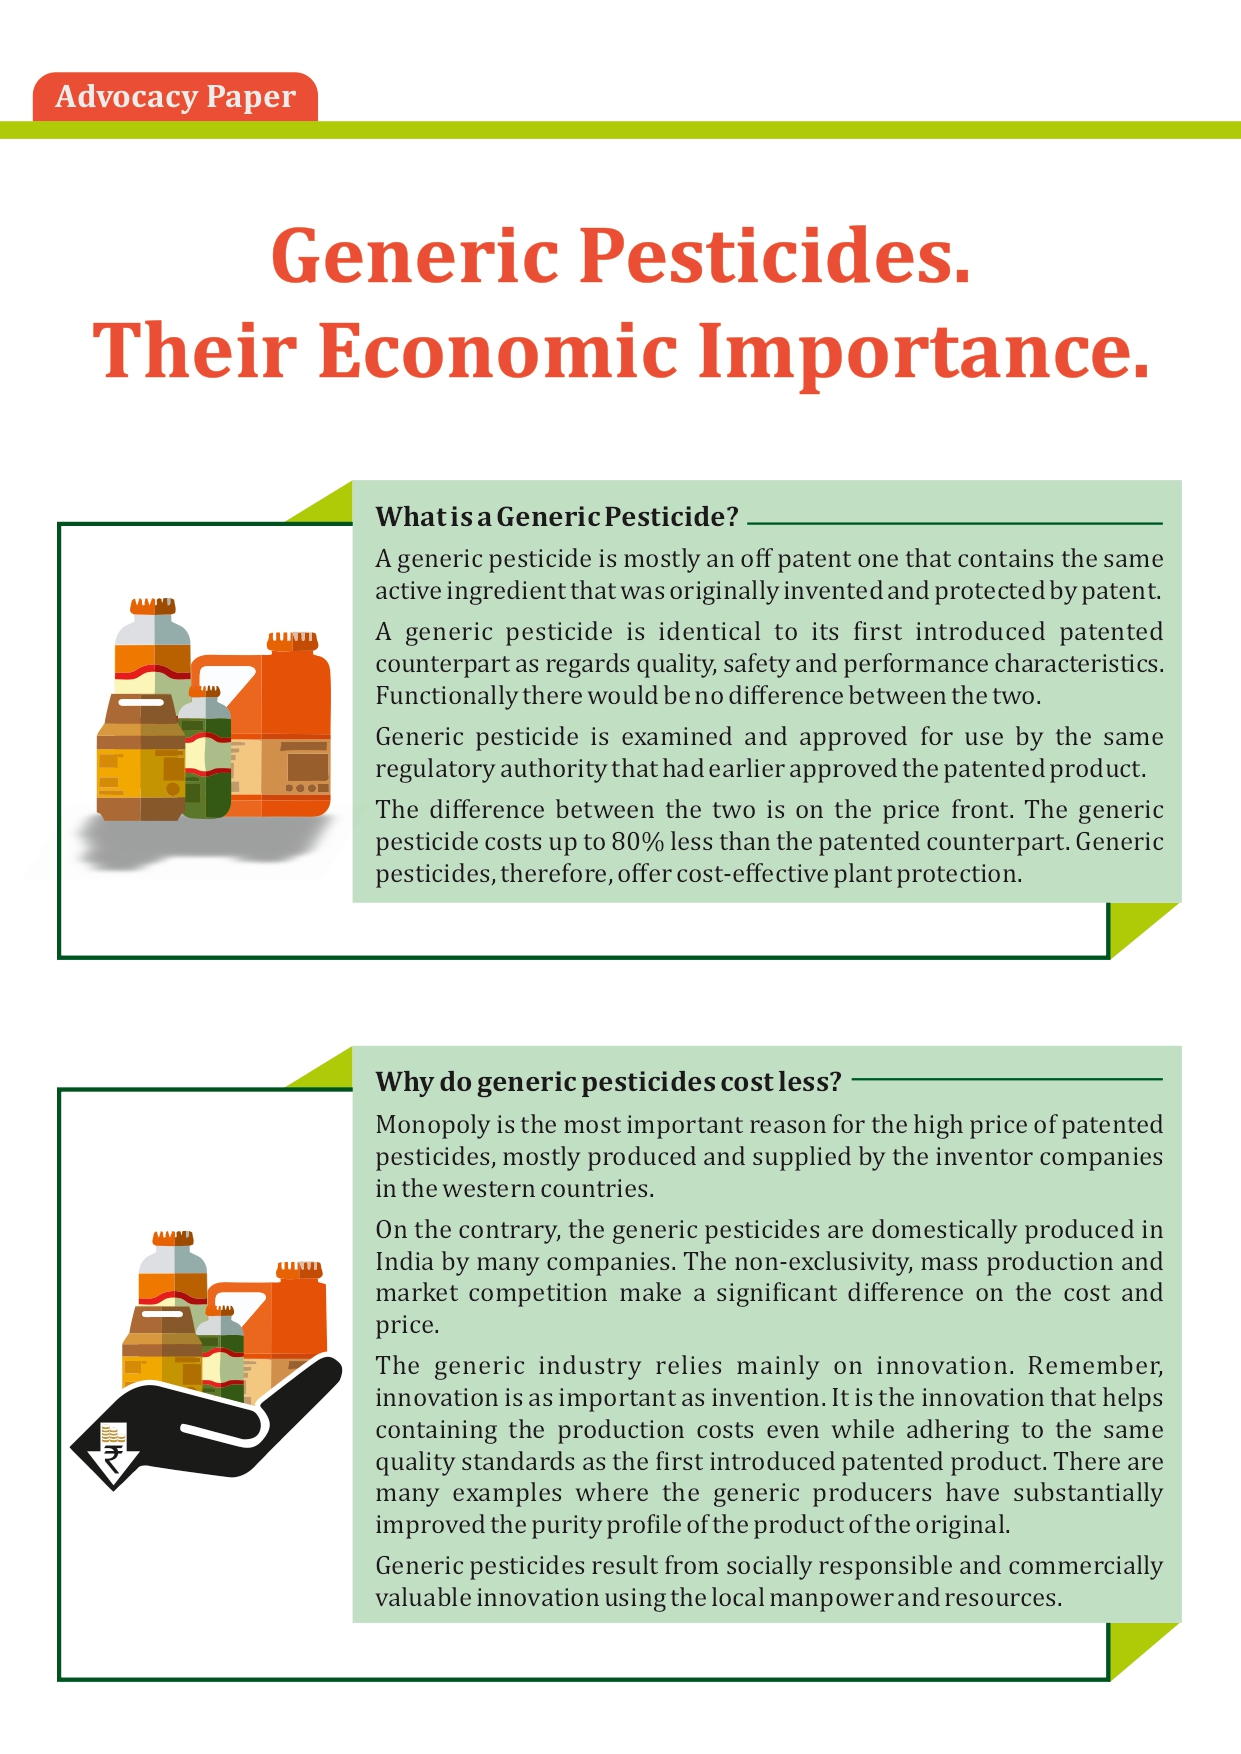 Generic Pesticides. Their Economic Importance - 01